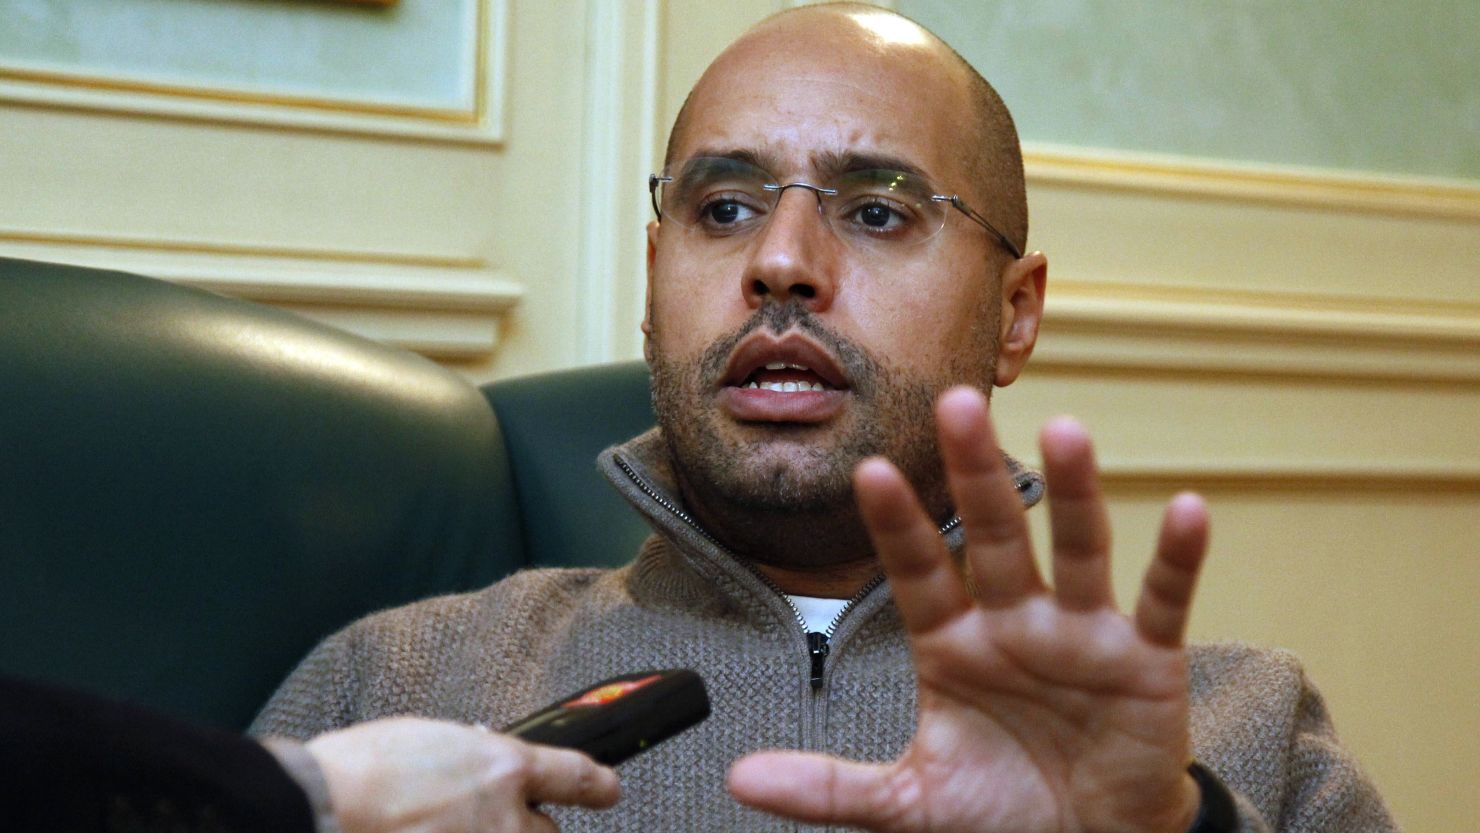 Saif al-Islam Gadhafi speaks during a press interview in Tripoli on February 26, 2011 